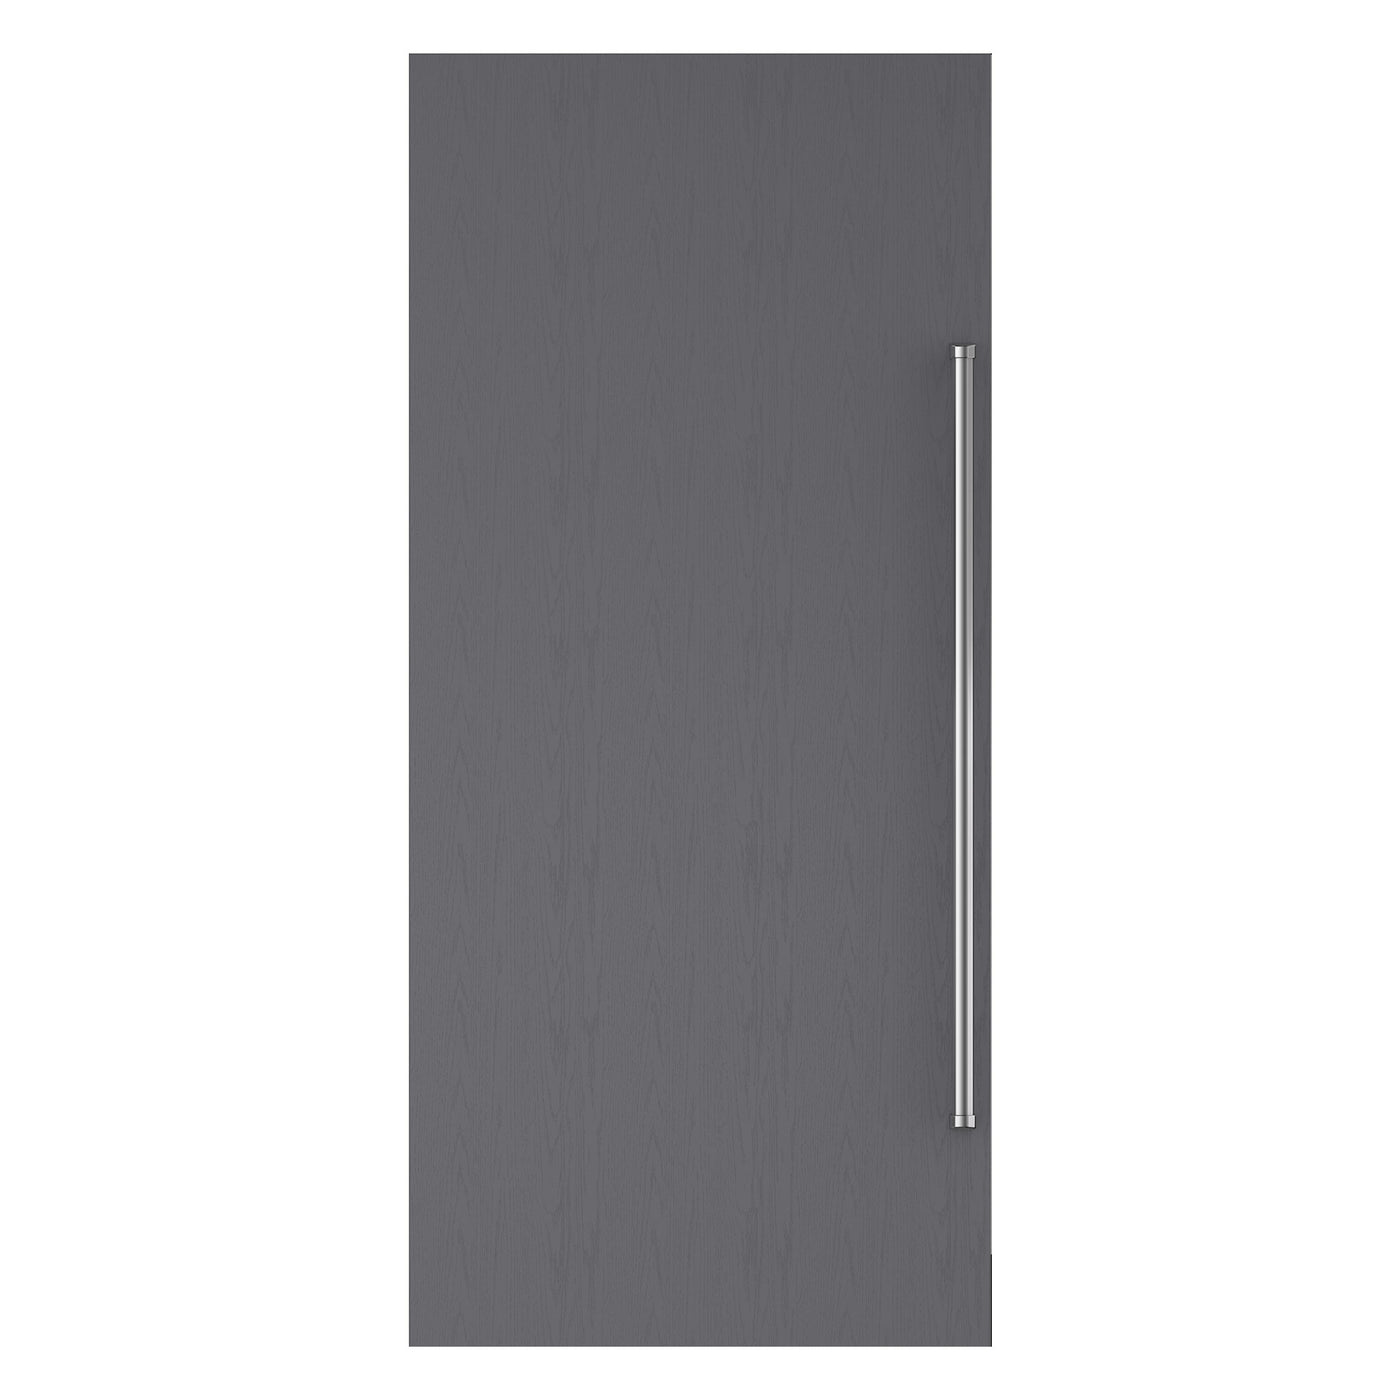 36" Panel-Ready Designer Column Refrigerator